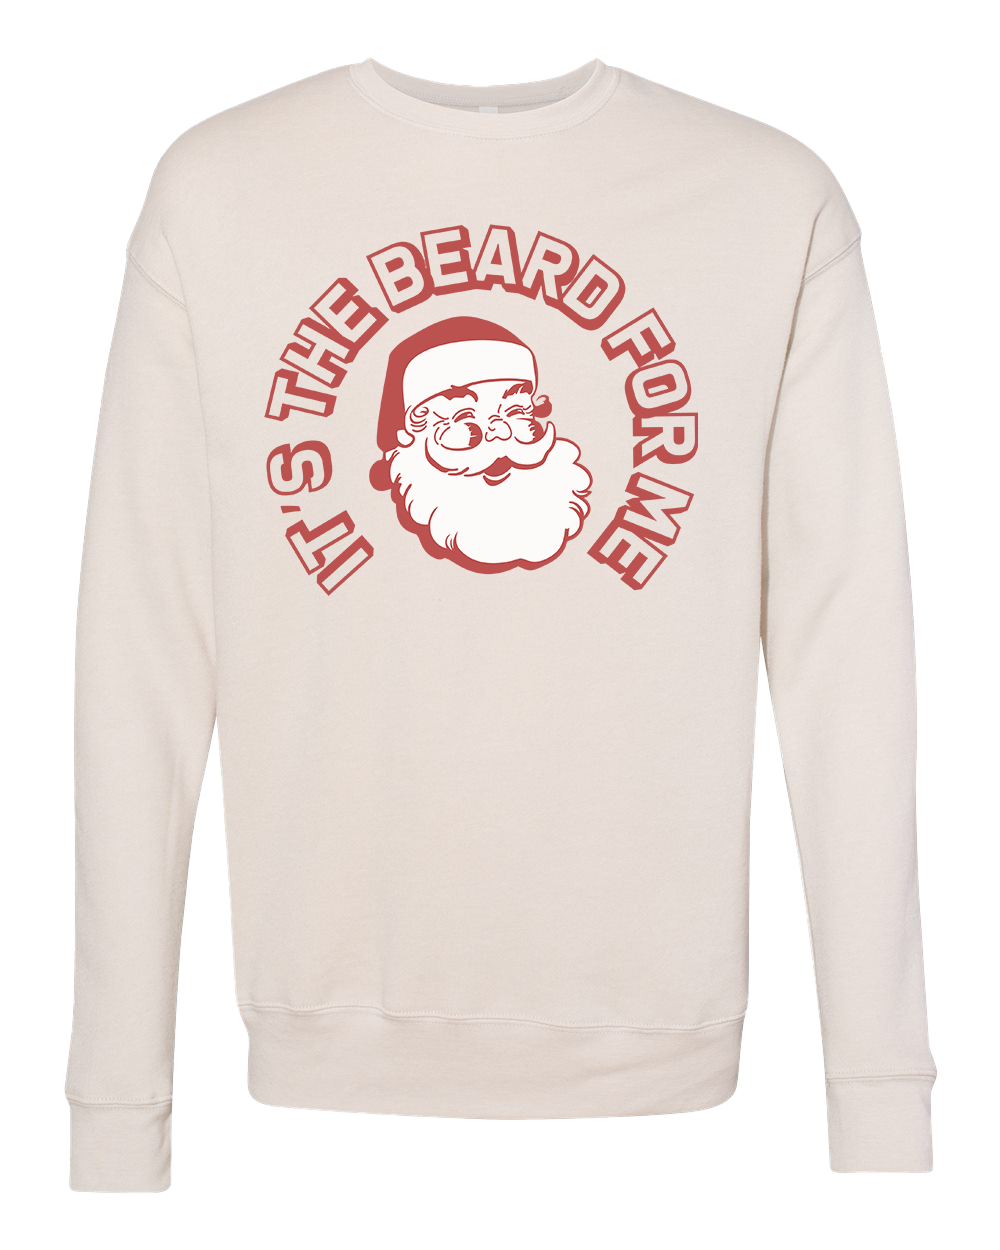 It's the Beard for Me Santa Claus Crew Sweatshirt - Heather Dust